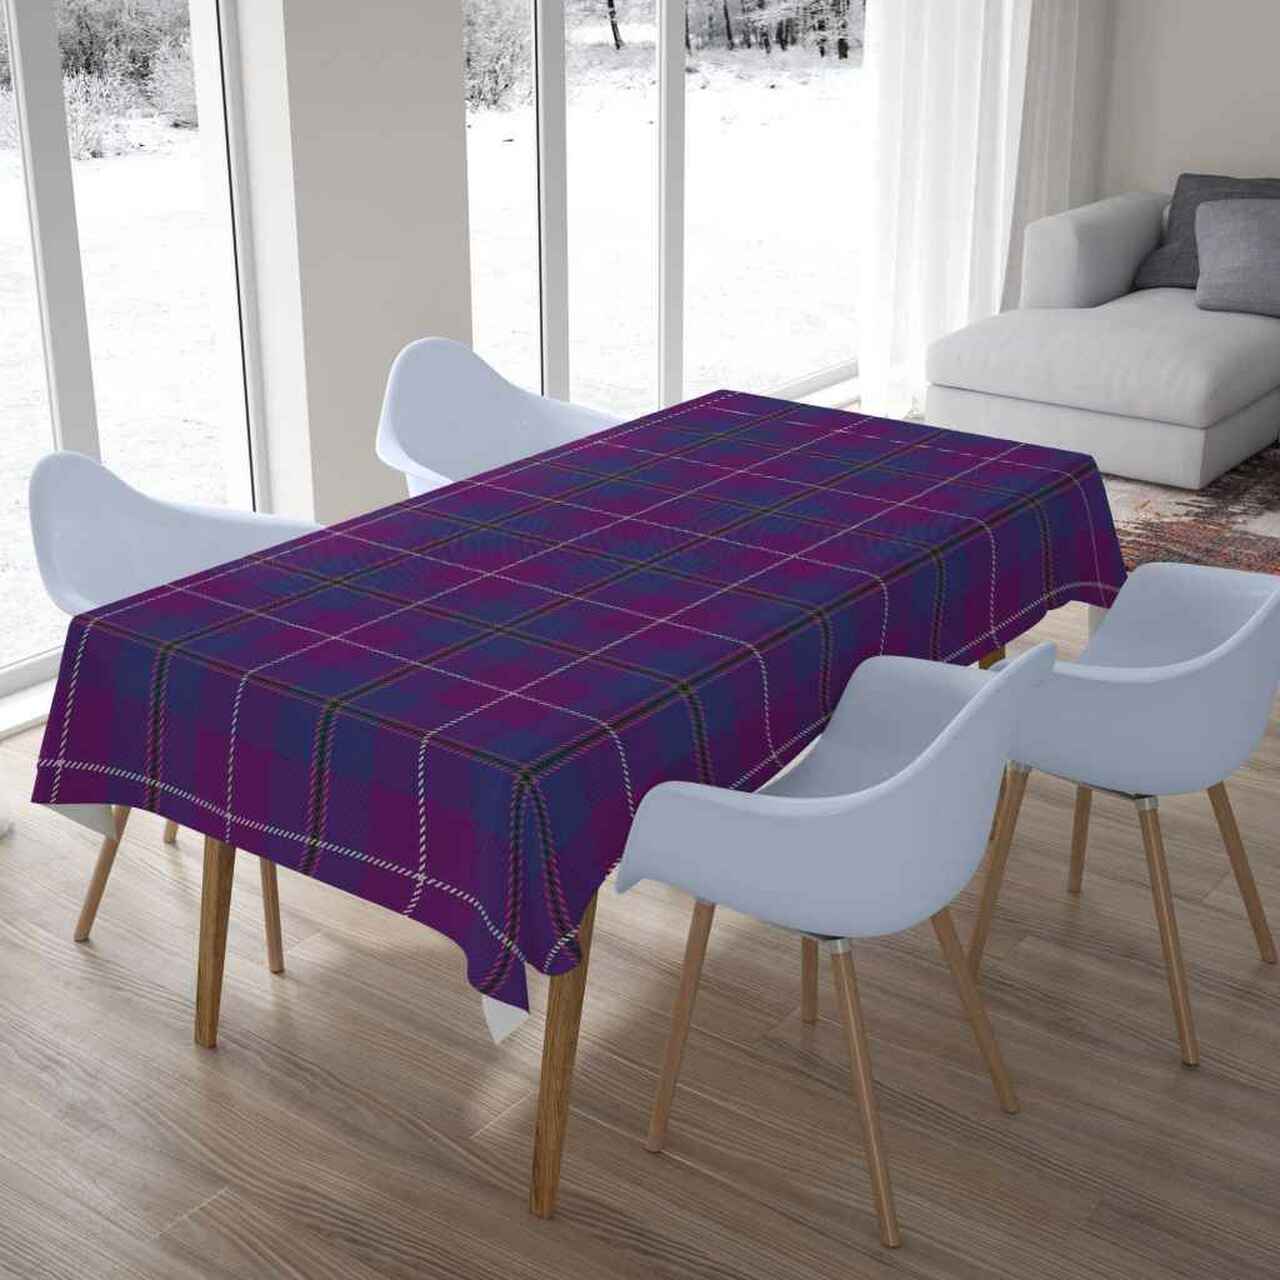 Pride of Glencoe Tartan Tablecloth